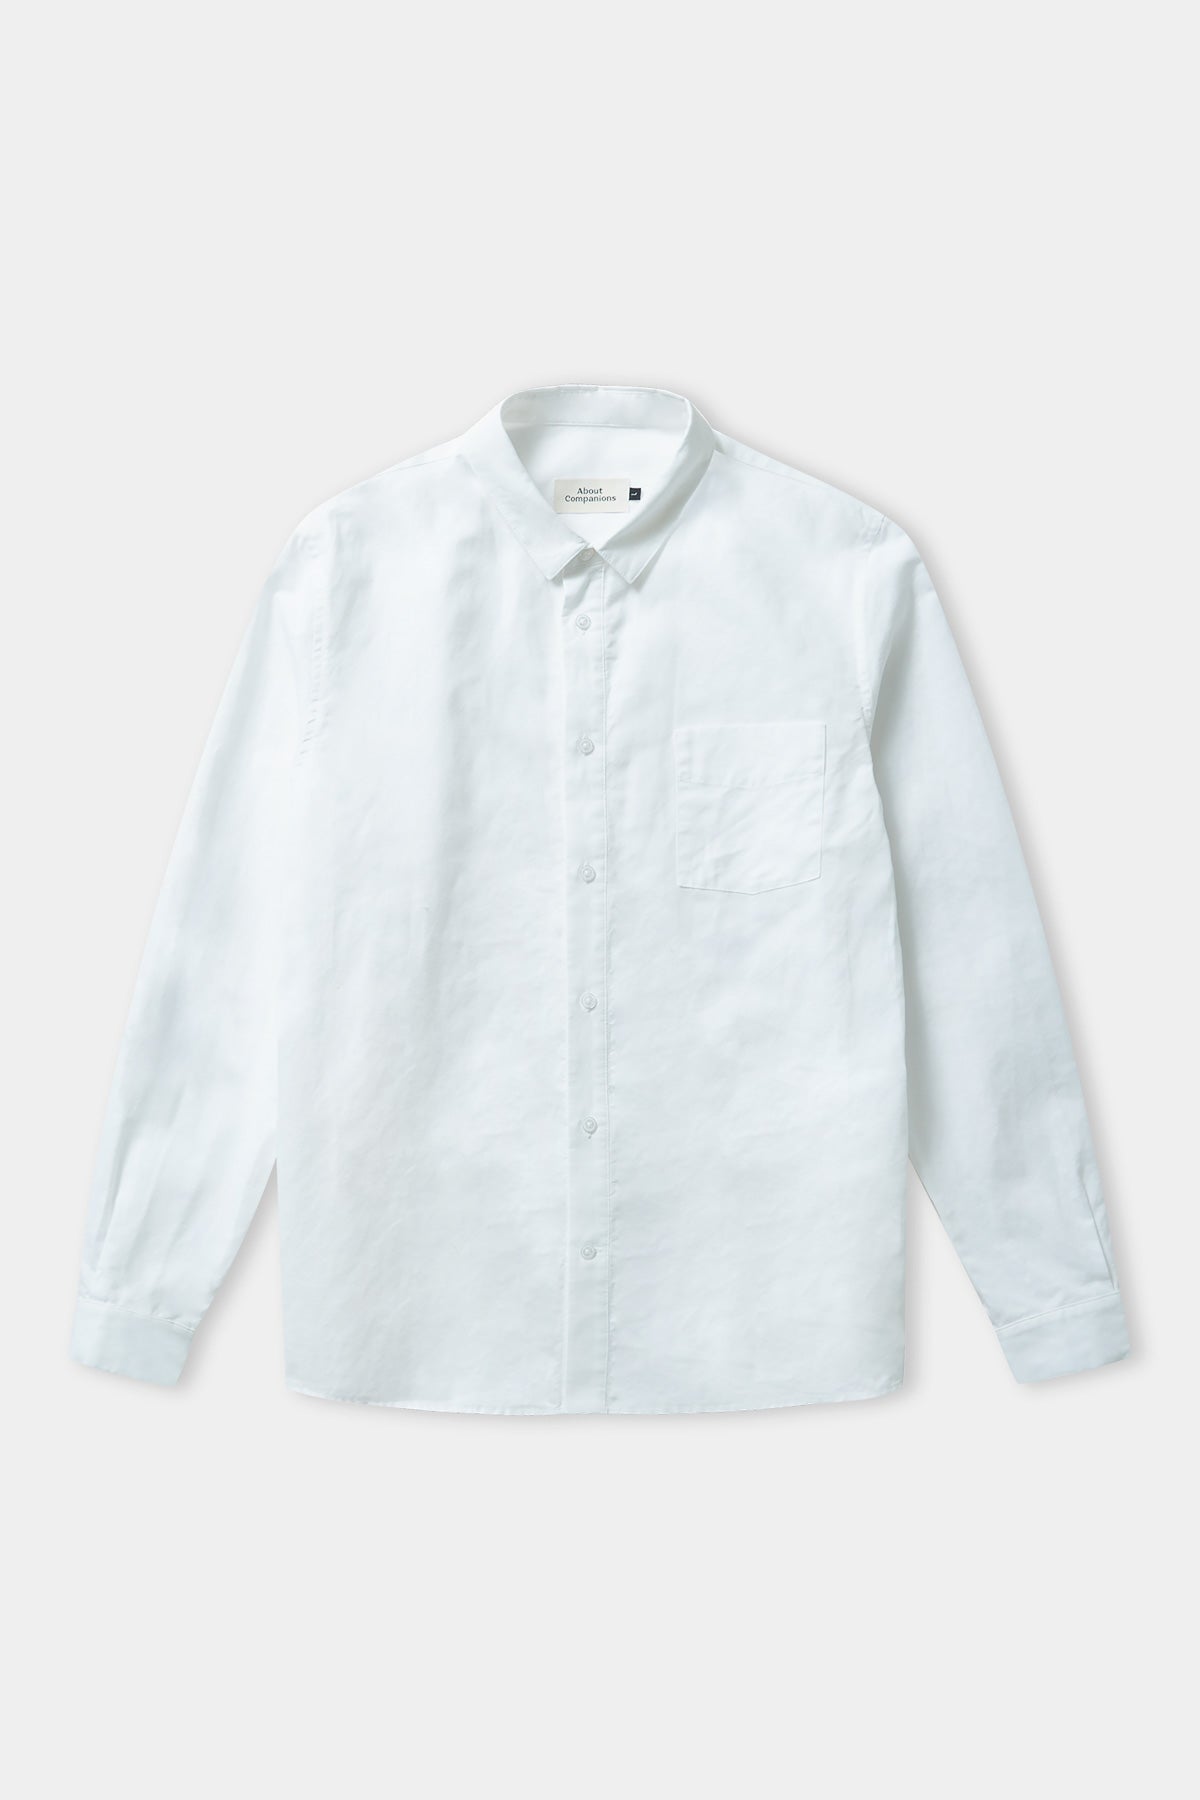 SIMON shirt white linen